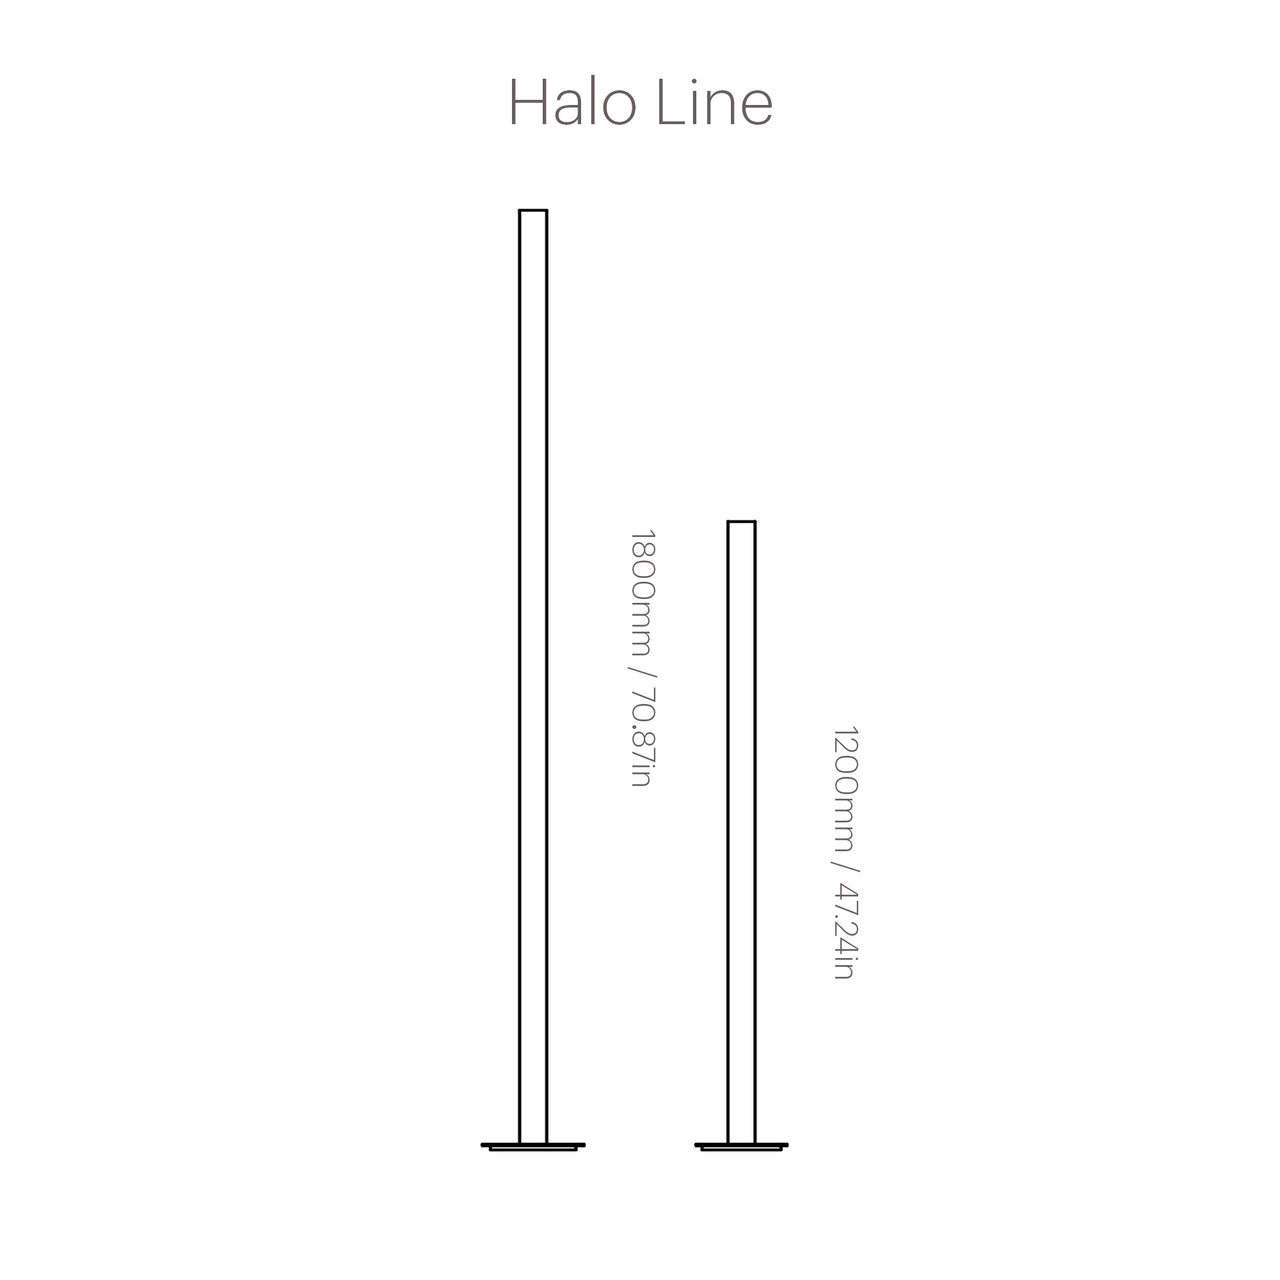 Halo Line